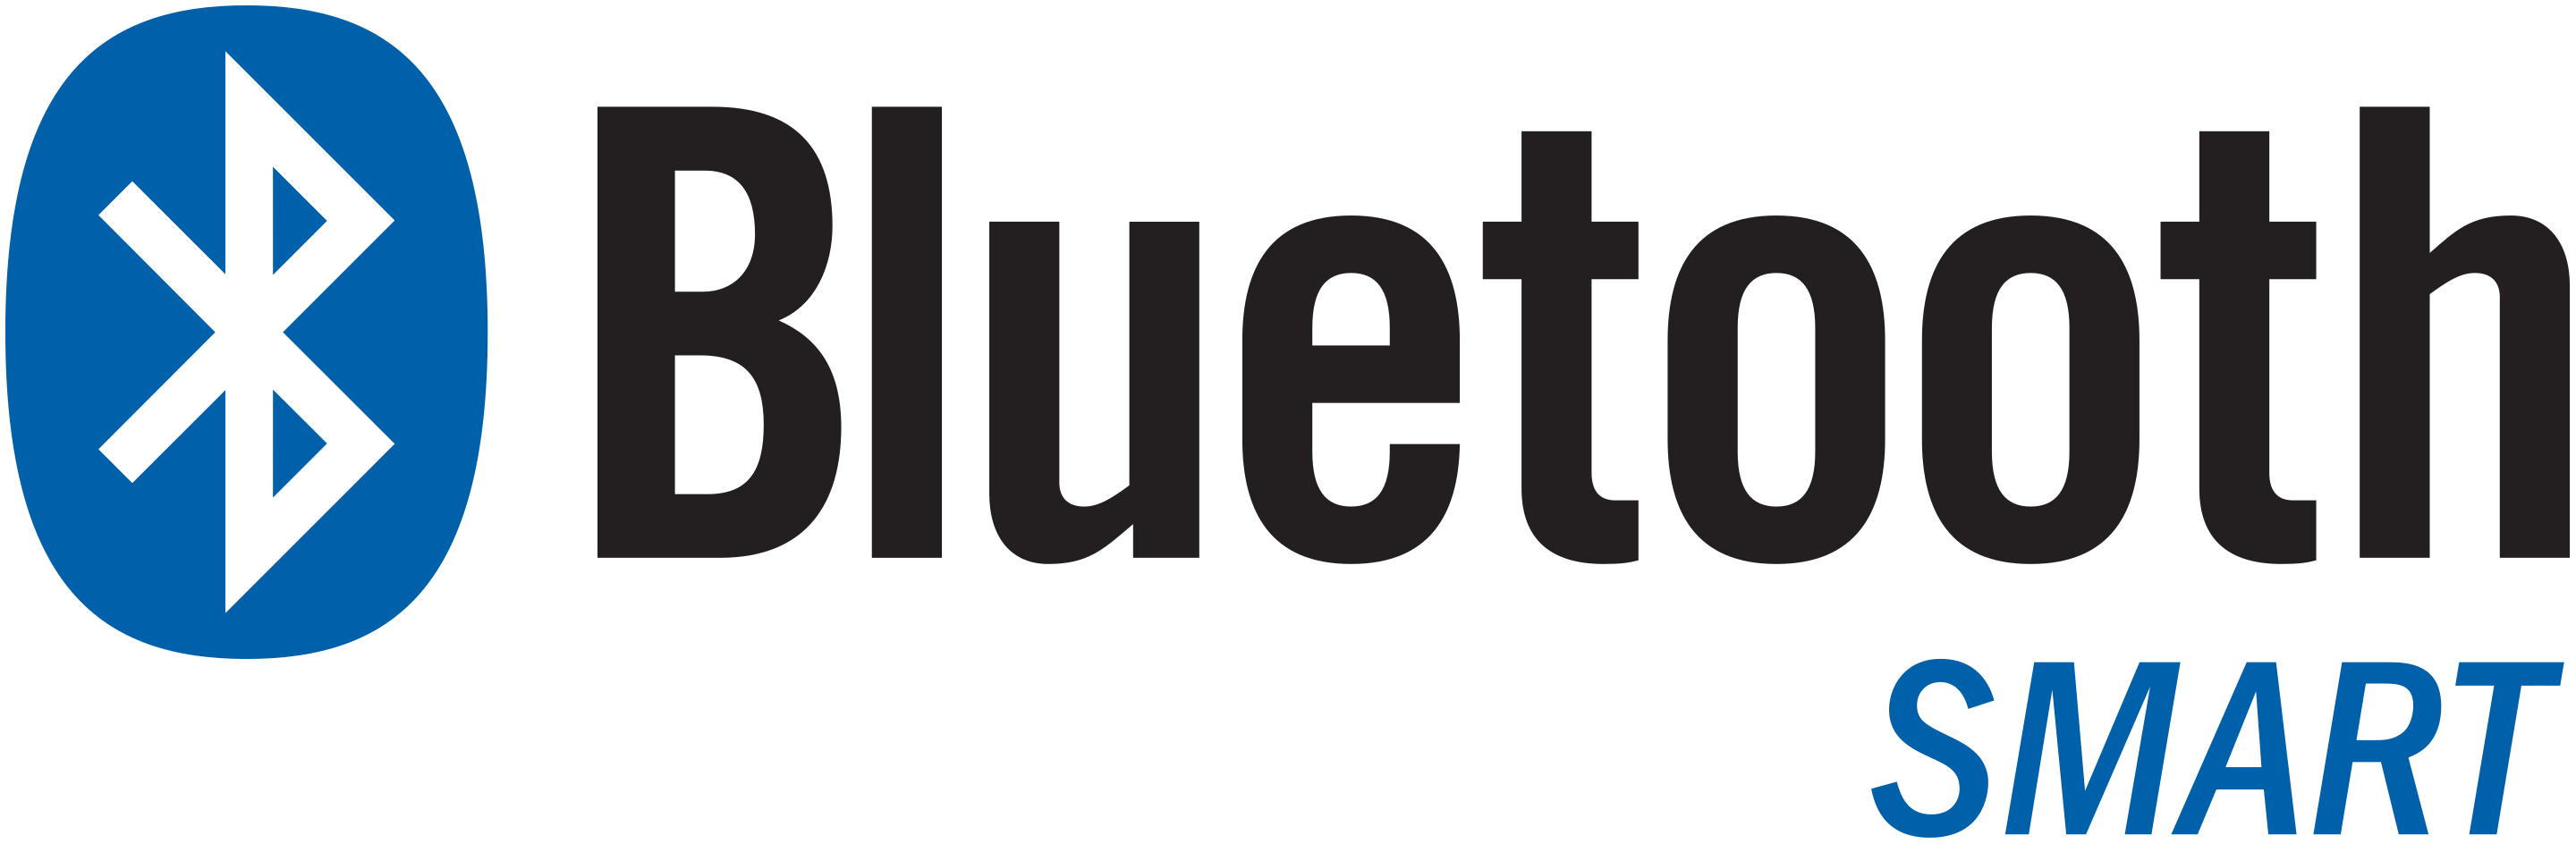 bluetooth_smart_logo.svg.png